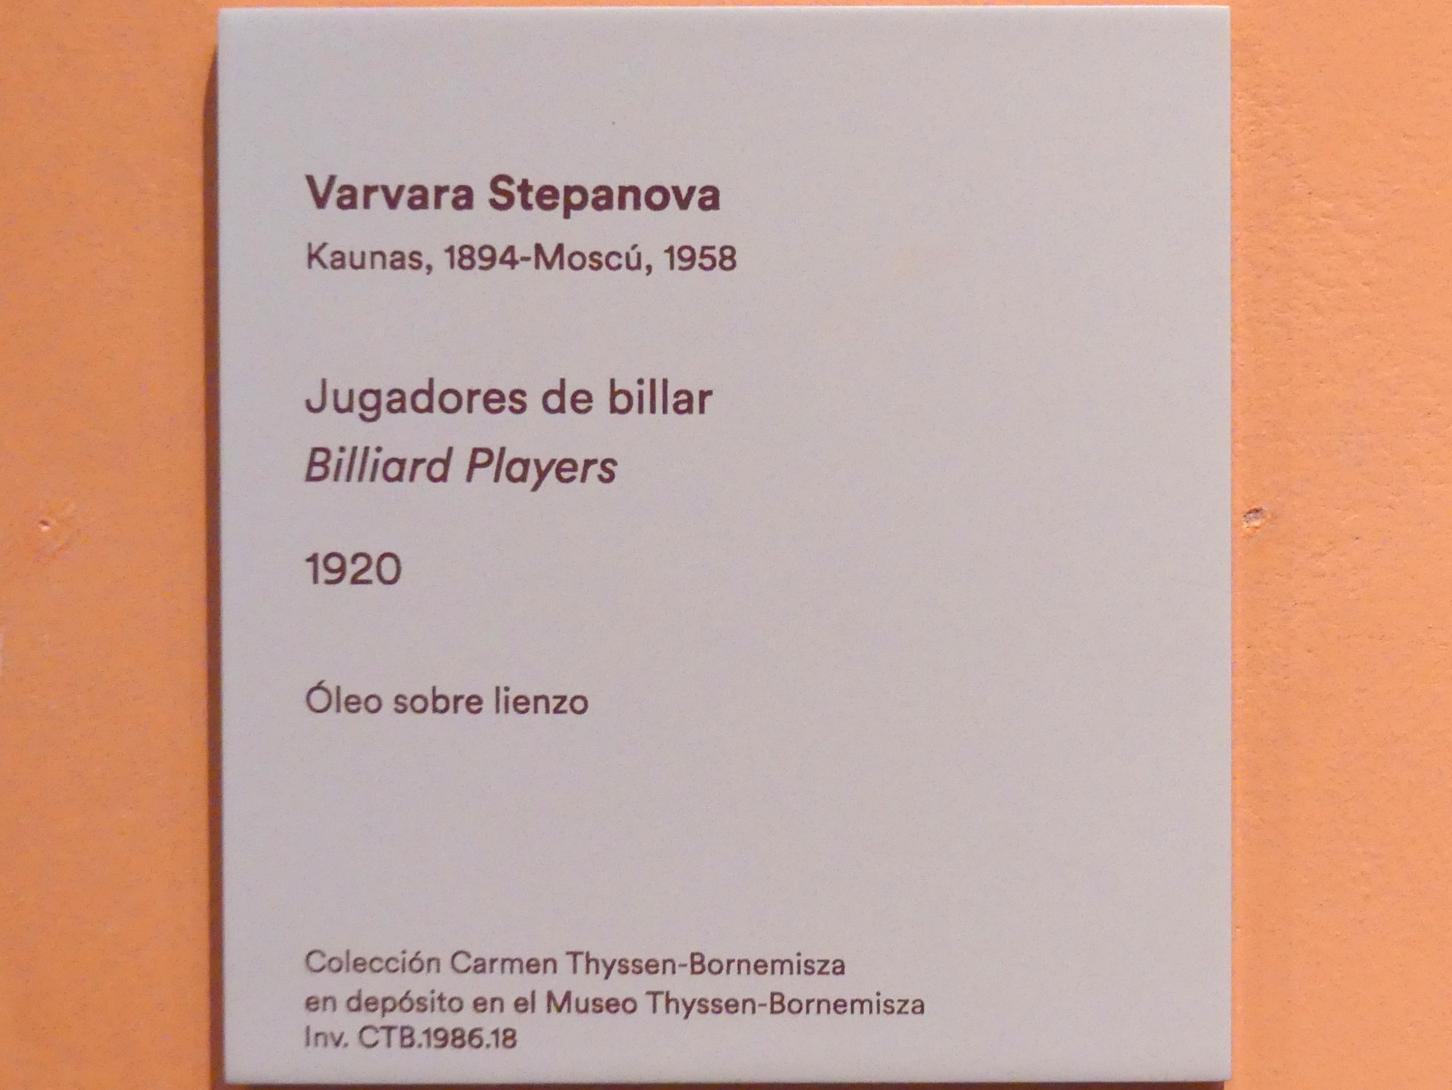 Warwara Fjodorowna Stepanowa (1920), Billardspieler, Madrid, Museo Thyssen-Bornemisza, Saal P, erste Avantgarden, 1920, Bild 2/2